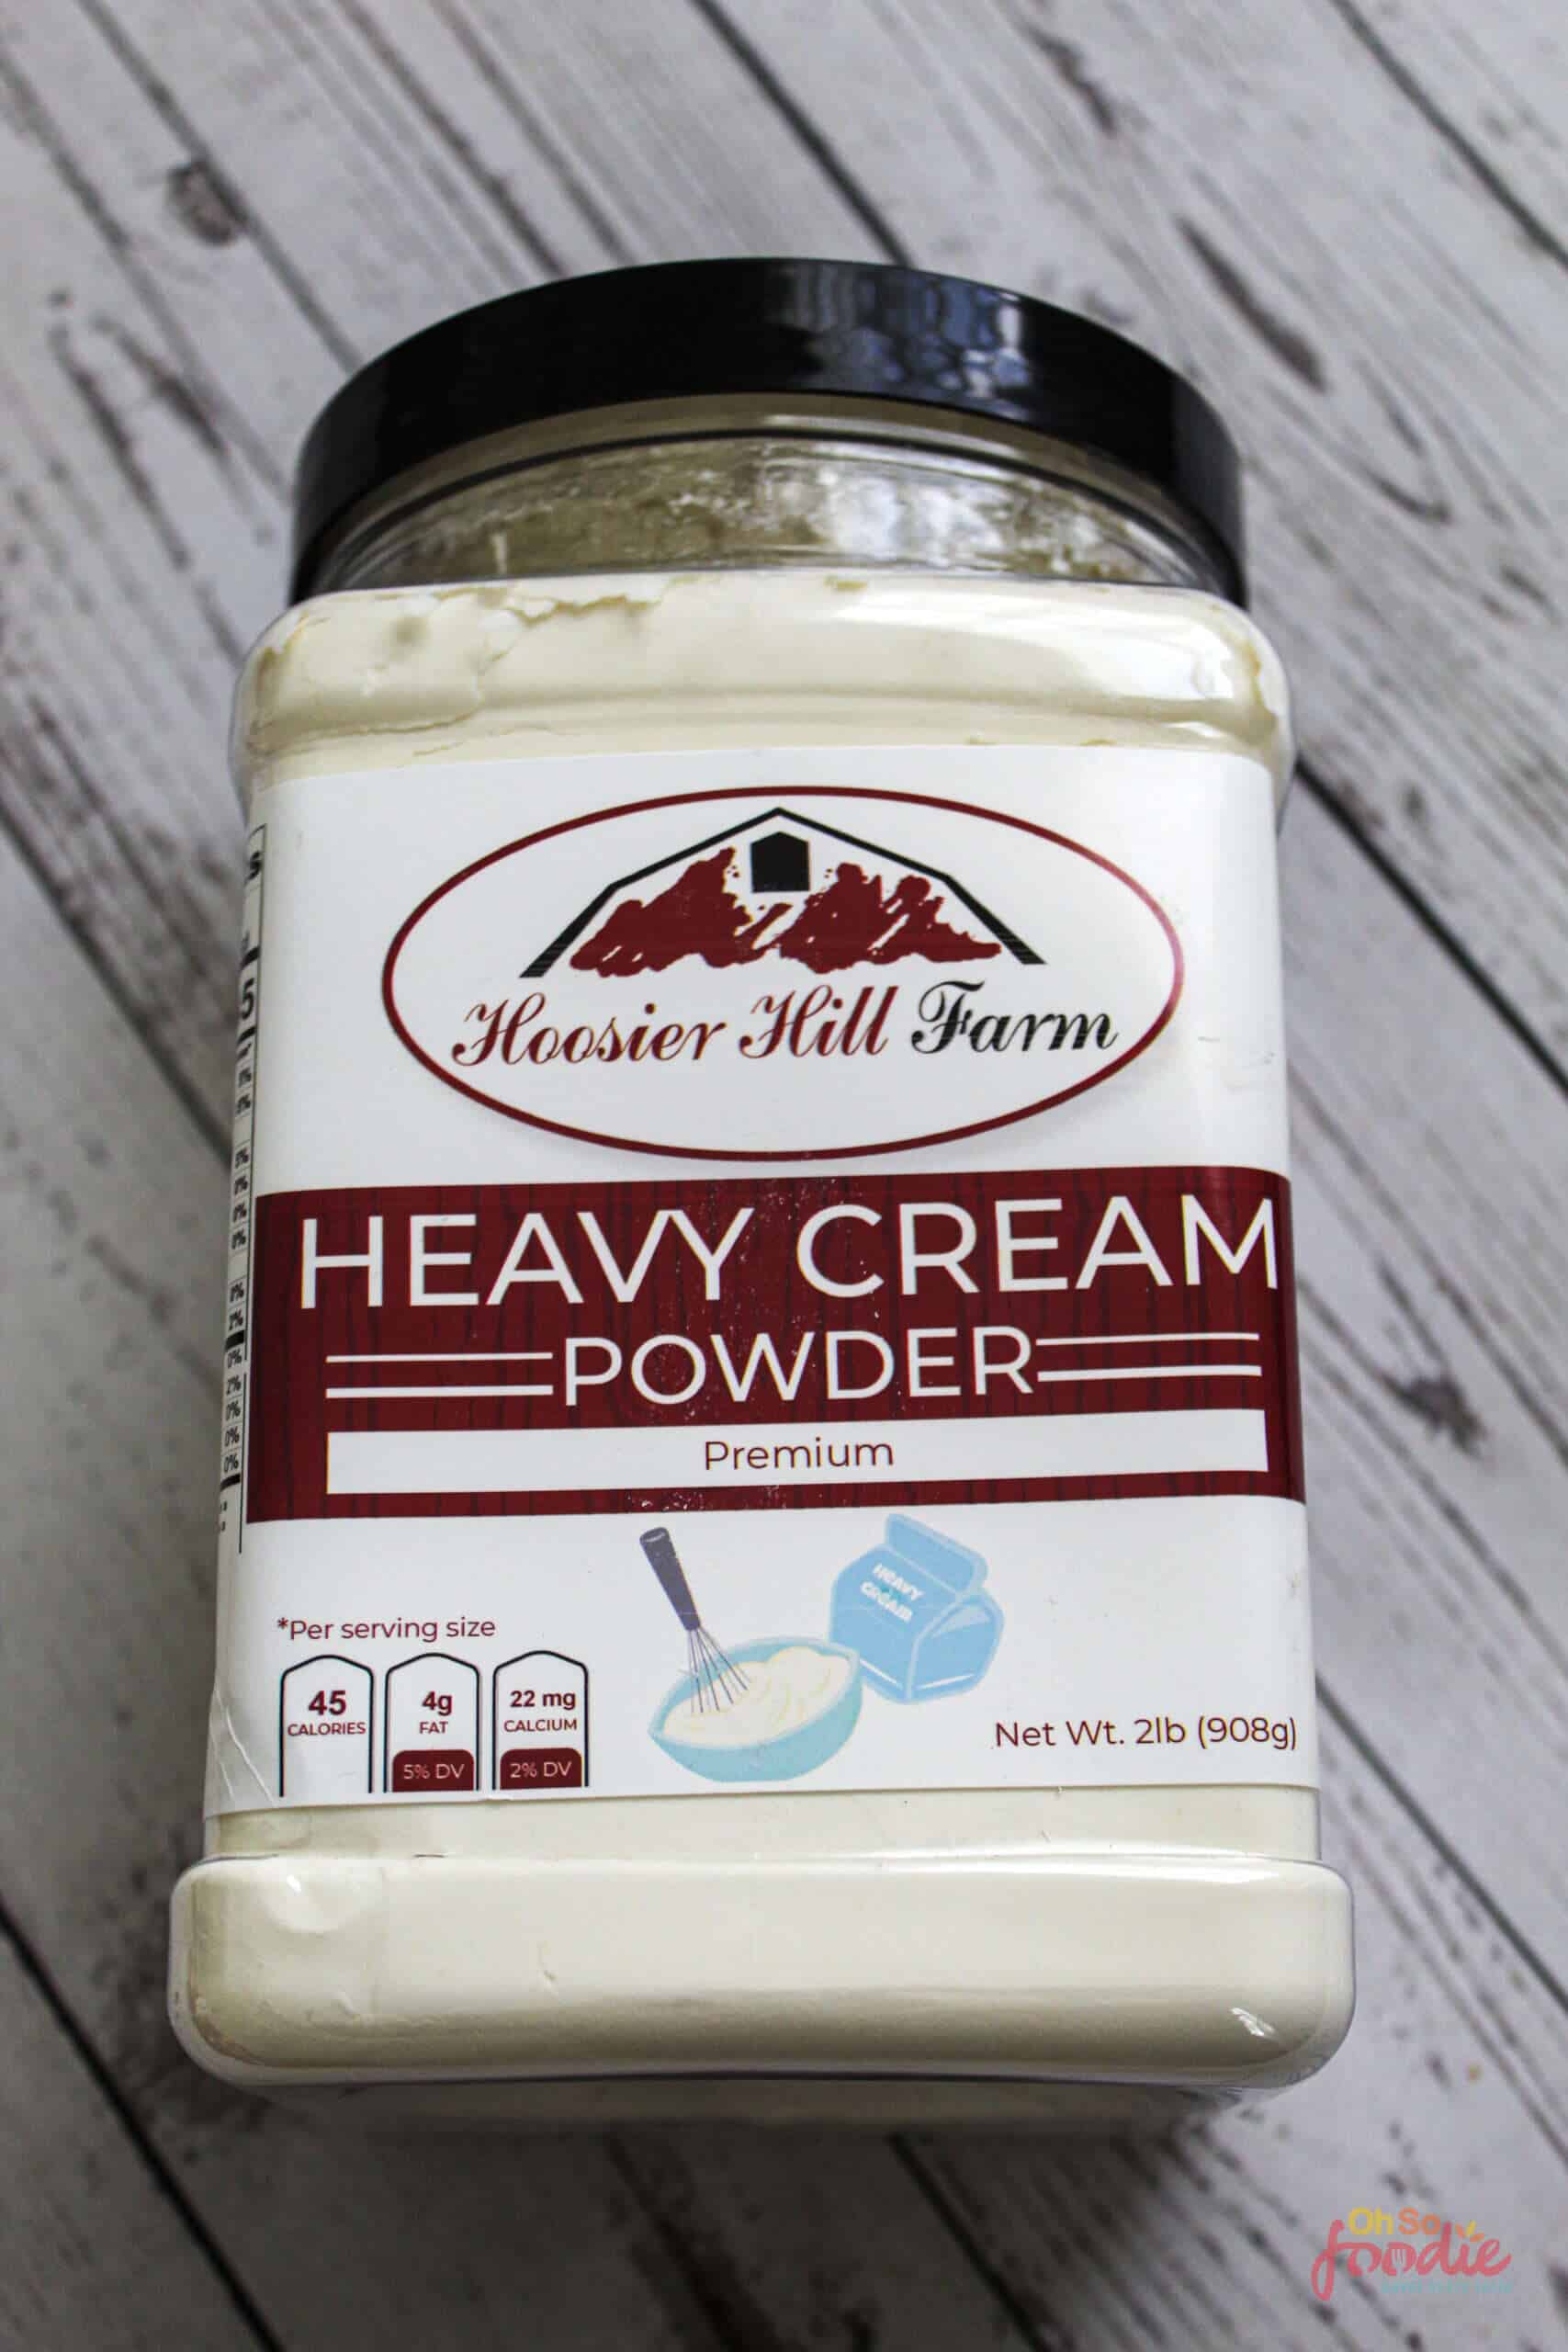 Heavy cream powder